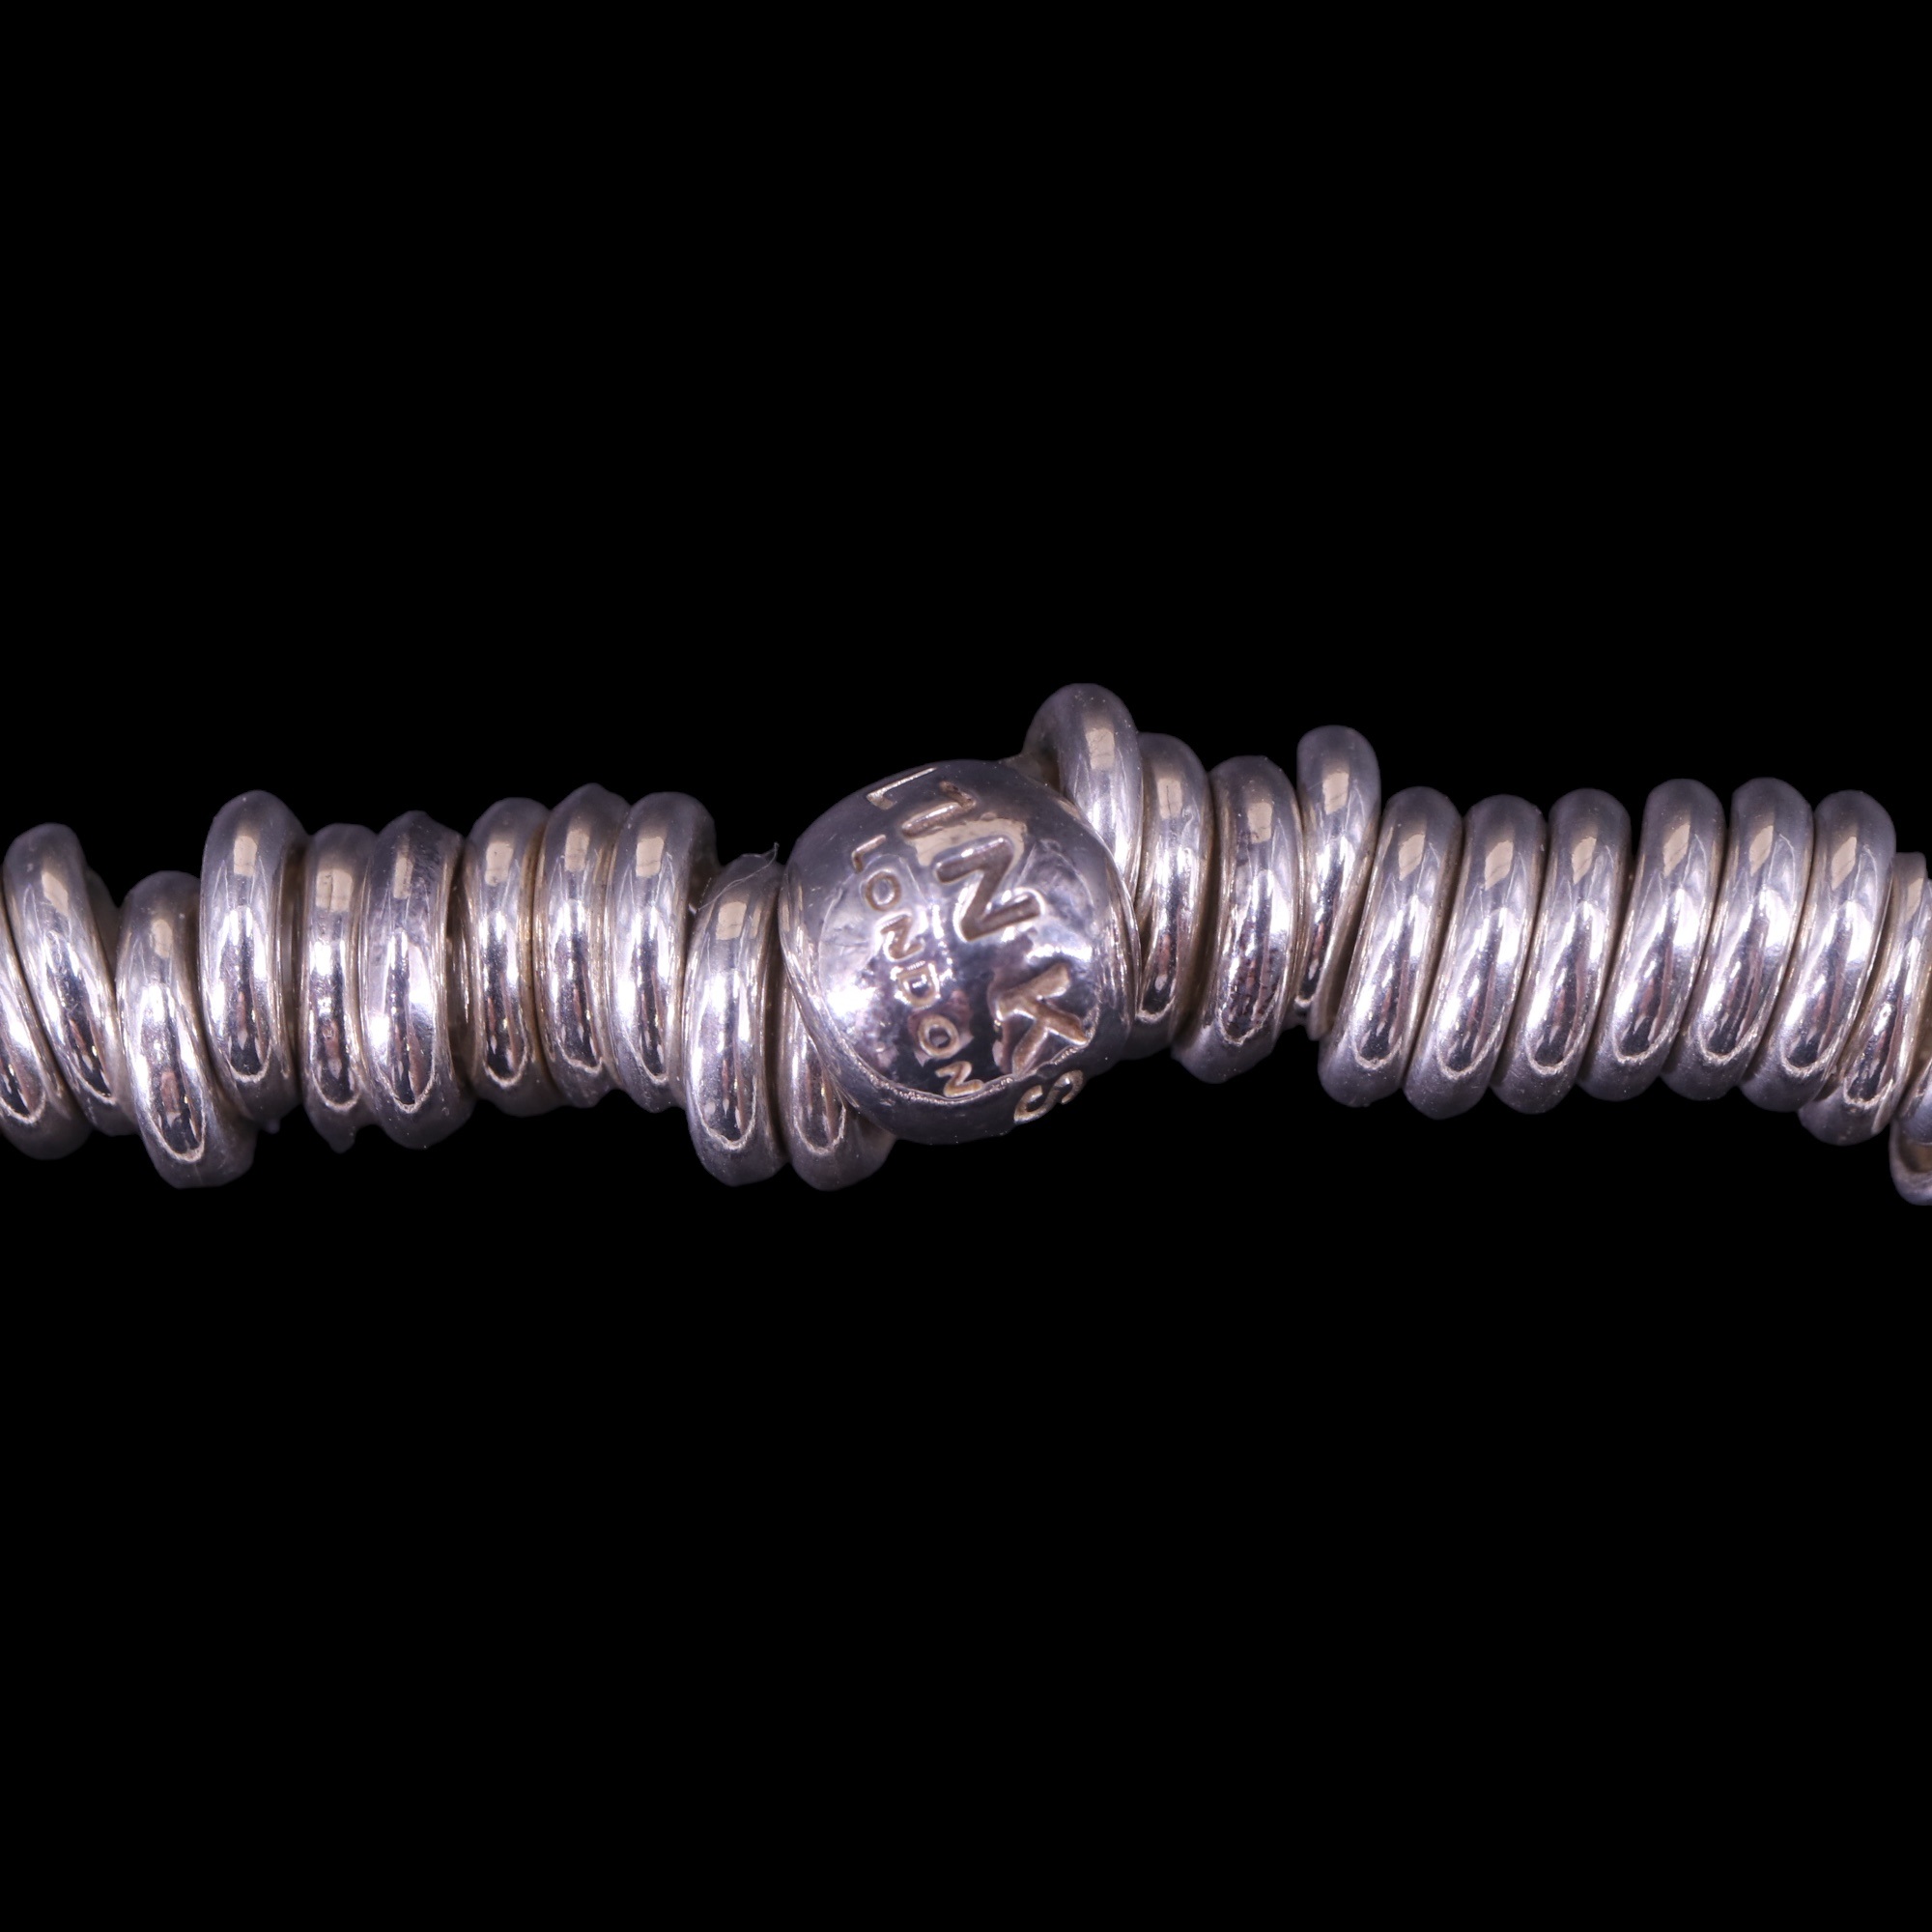 A Links of London white-metal charm bracelet, 60 g - Image 3 of 3